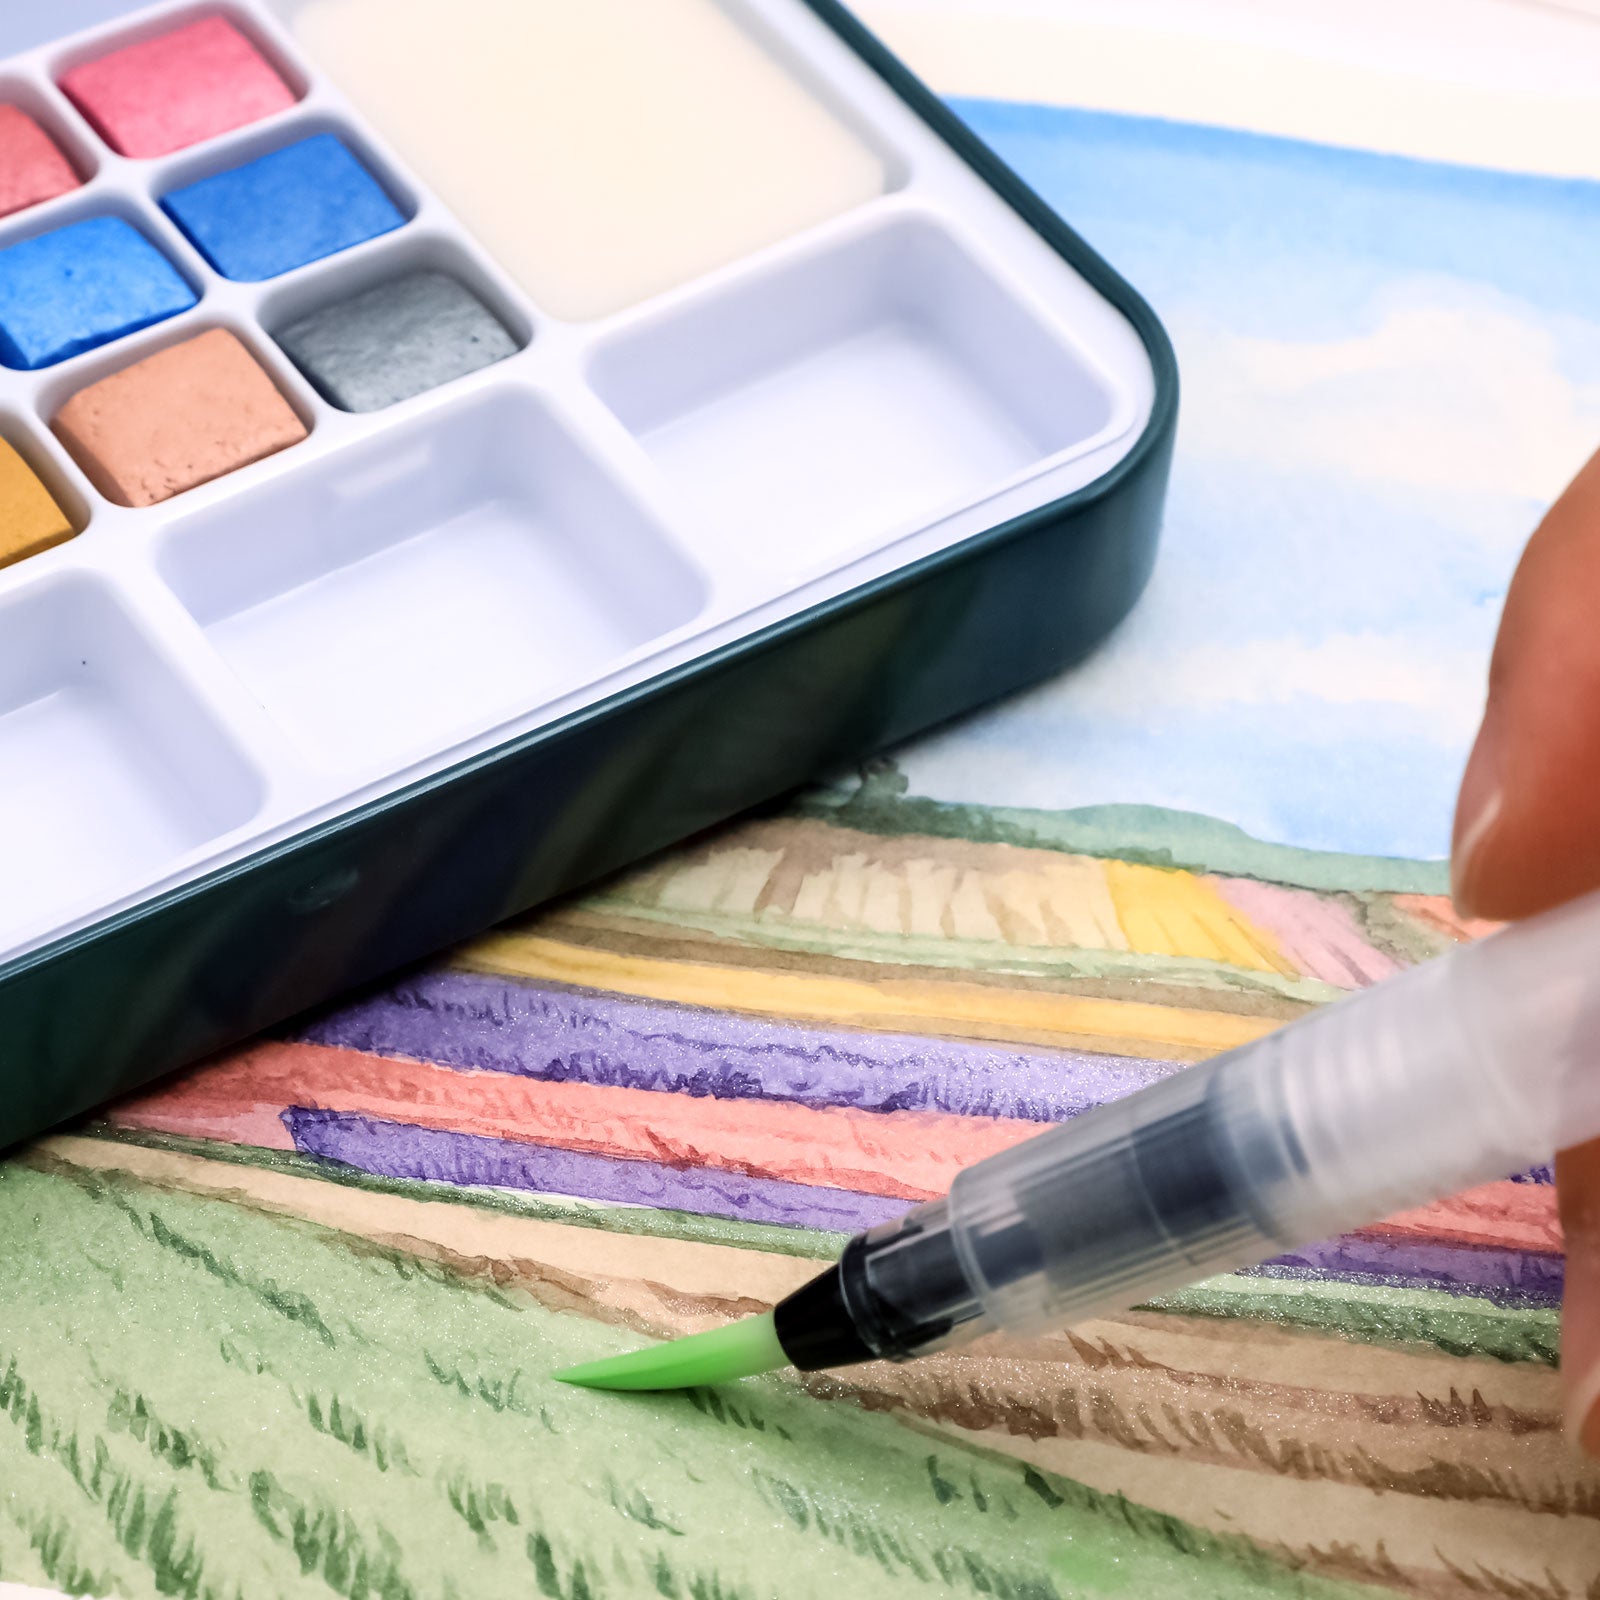 Artecho Metallic Watercolour Paint Set in Tin Case - Professional 18 colour - Lifespace